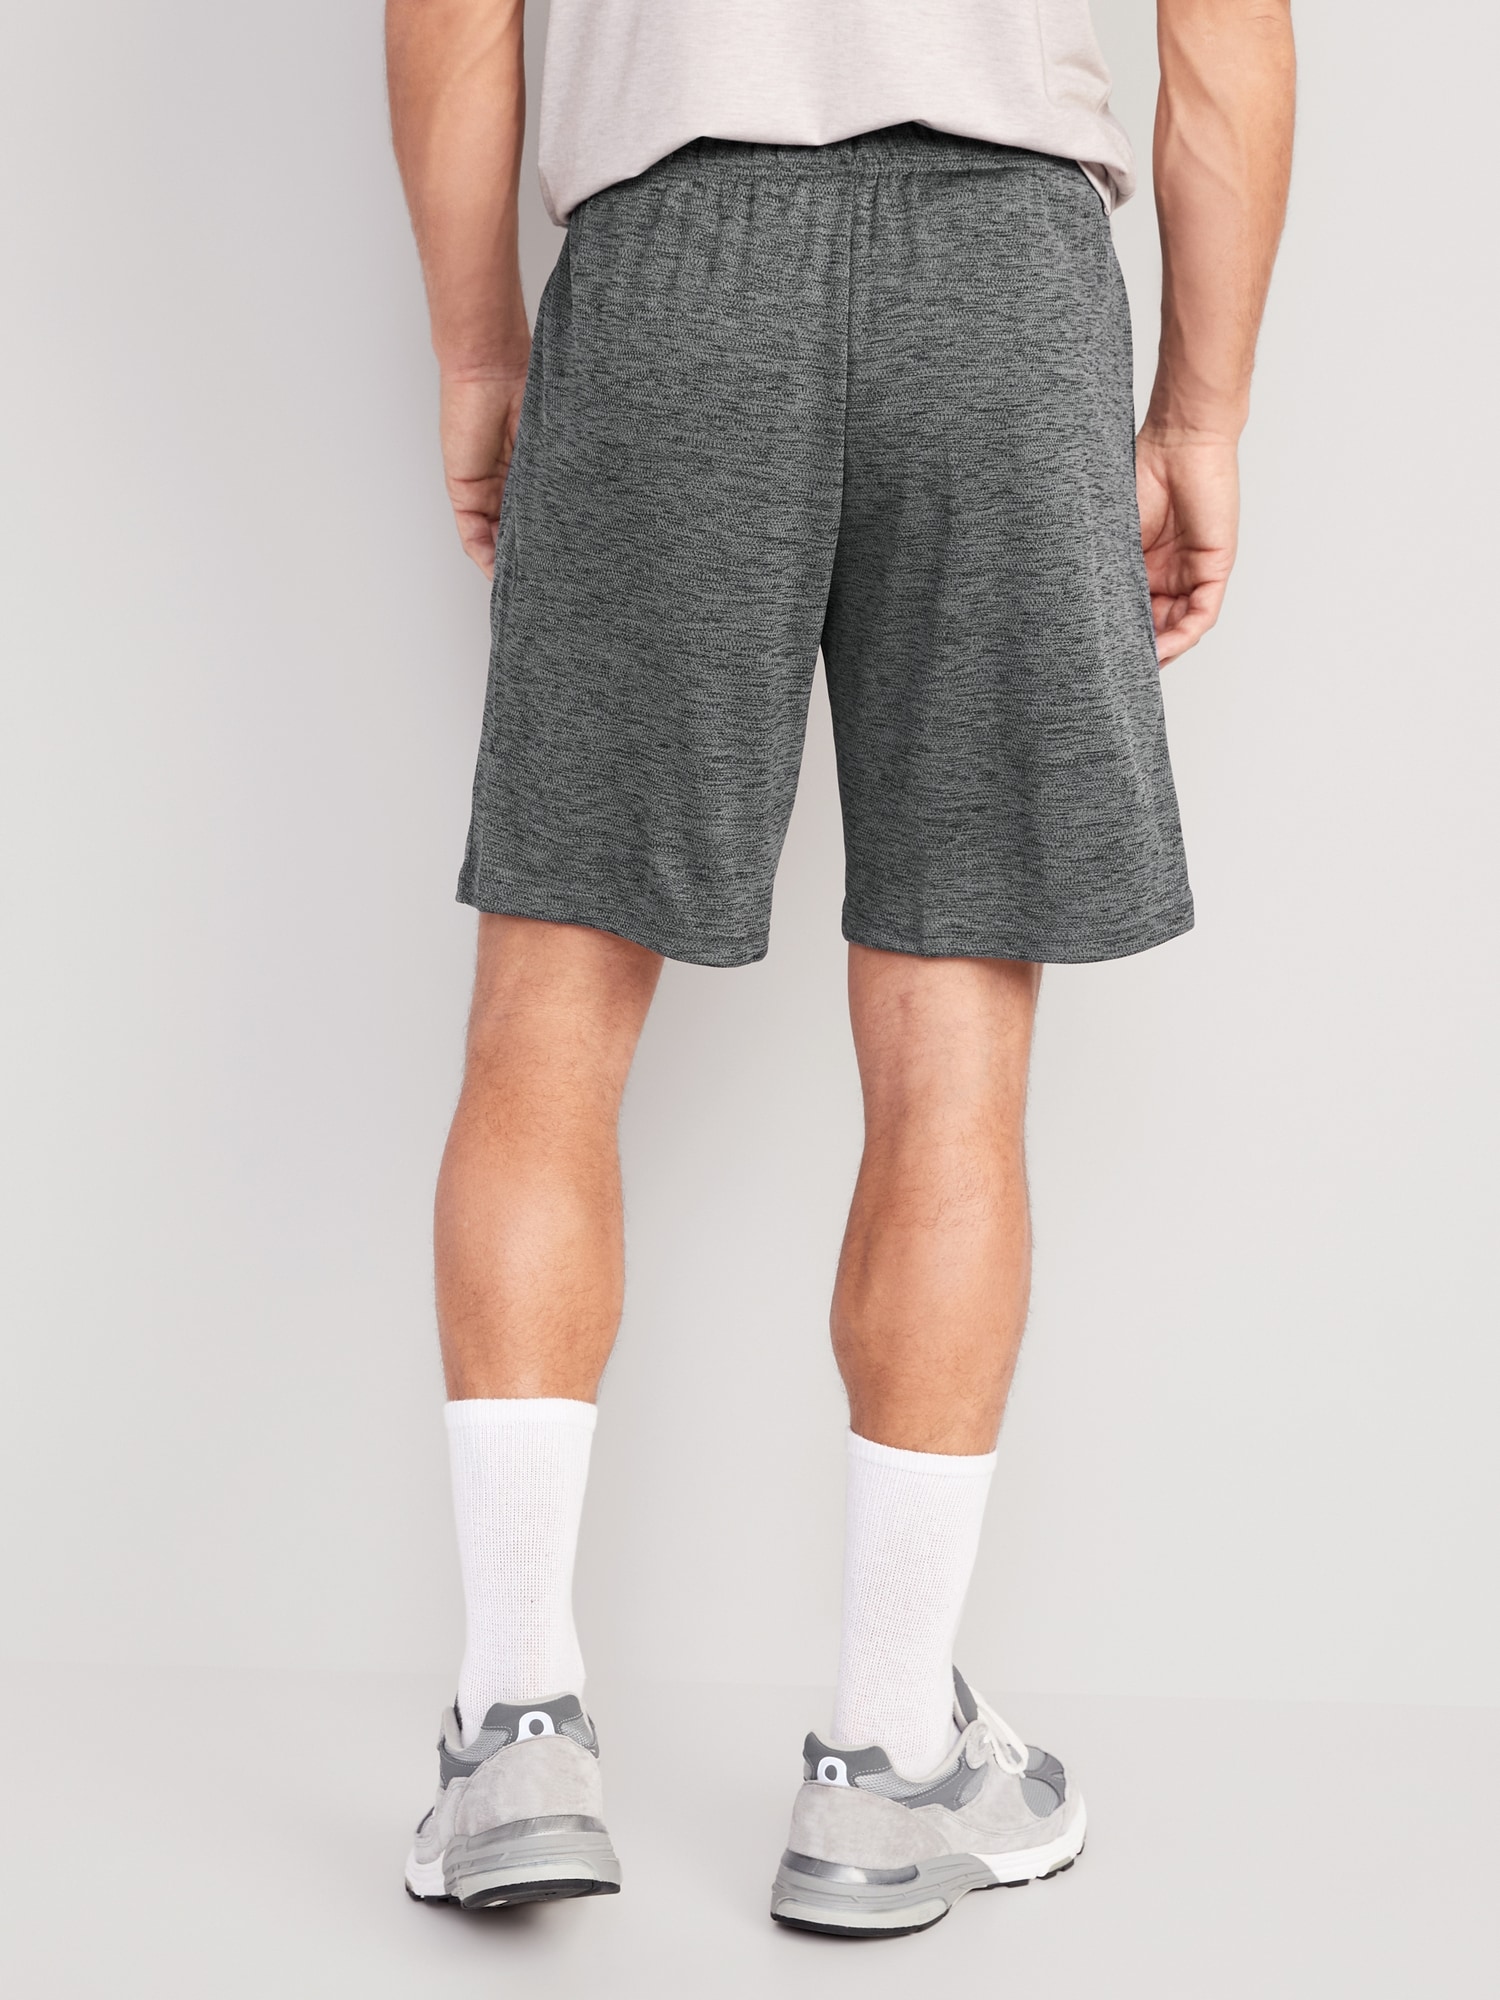 Old Navy Go-Dry Mesh Basketball Shorts for Men - 9-inch inseam